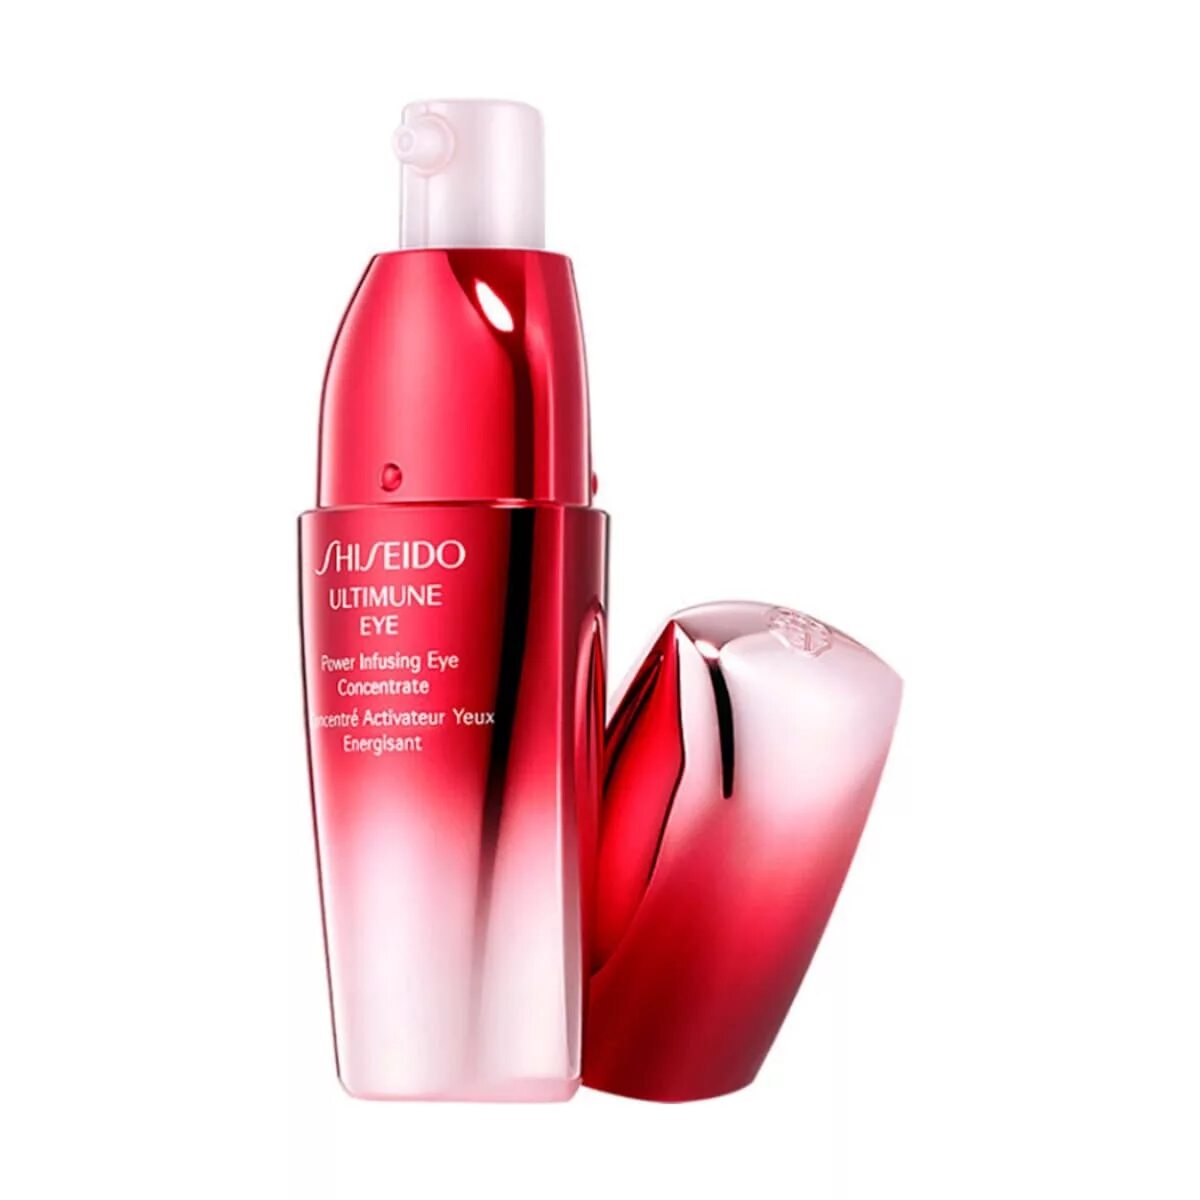 Ультимьюн шисейдо. Shiseido Ultimune Eye Power infusing. Shiseido Ultimune концентрат. Shiseido Ultimate.